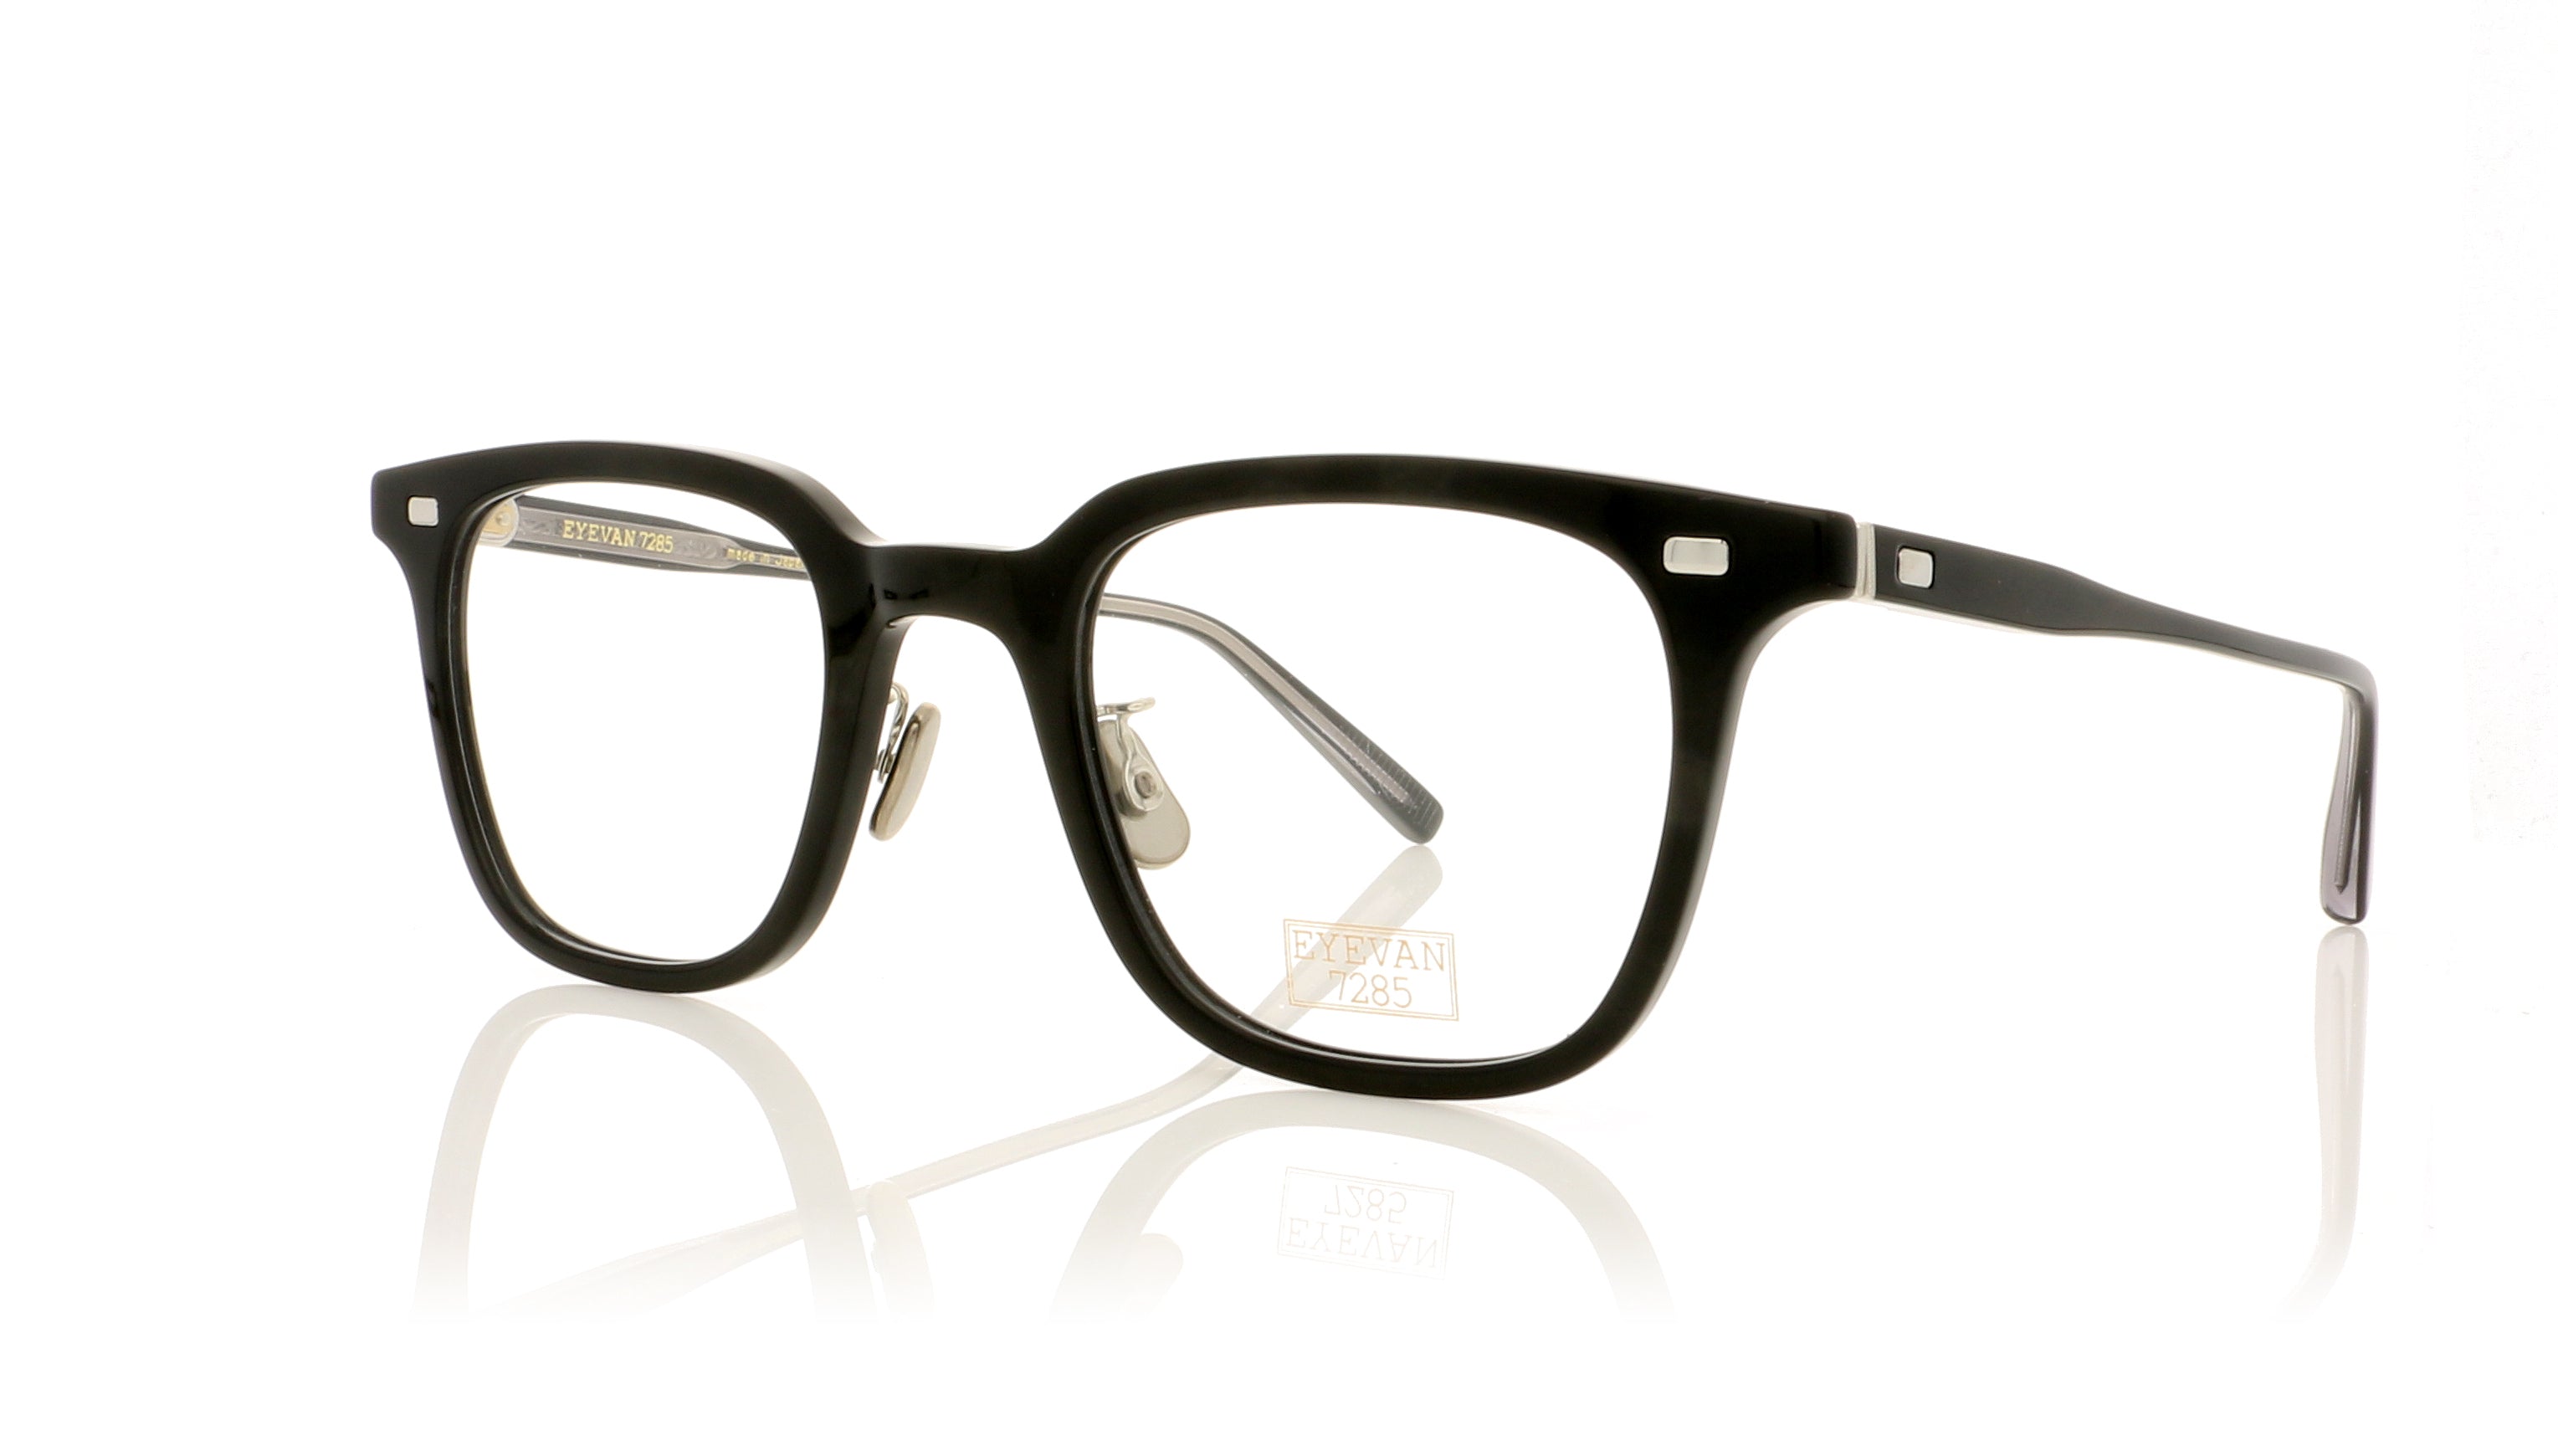 Eyevan 7285 319 100 Black Glasses | The Eye Place